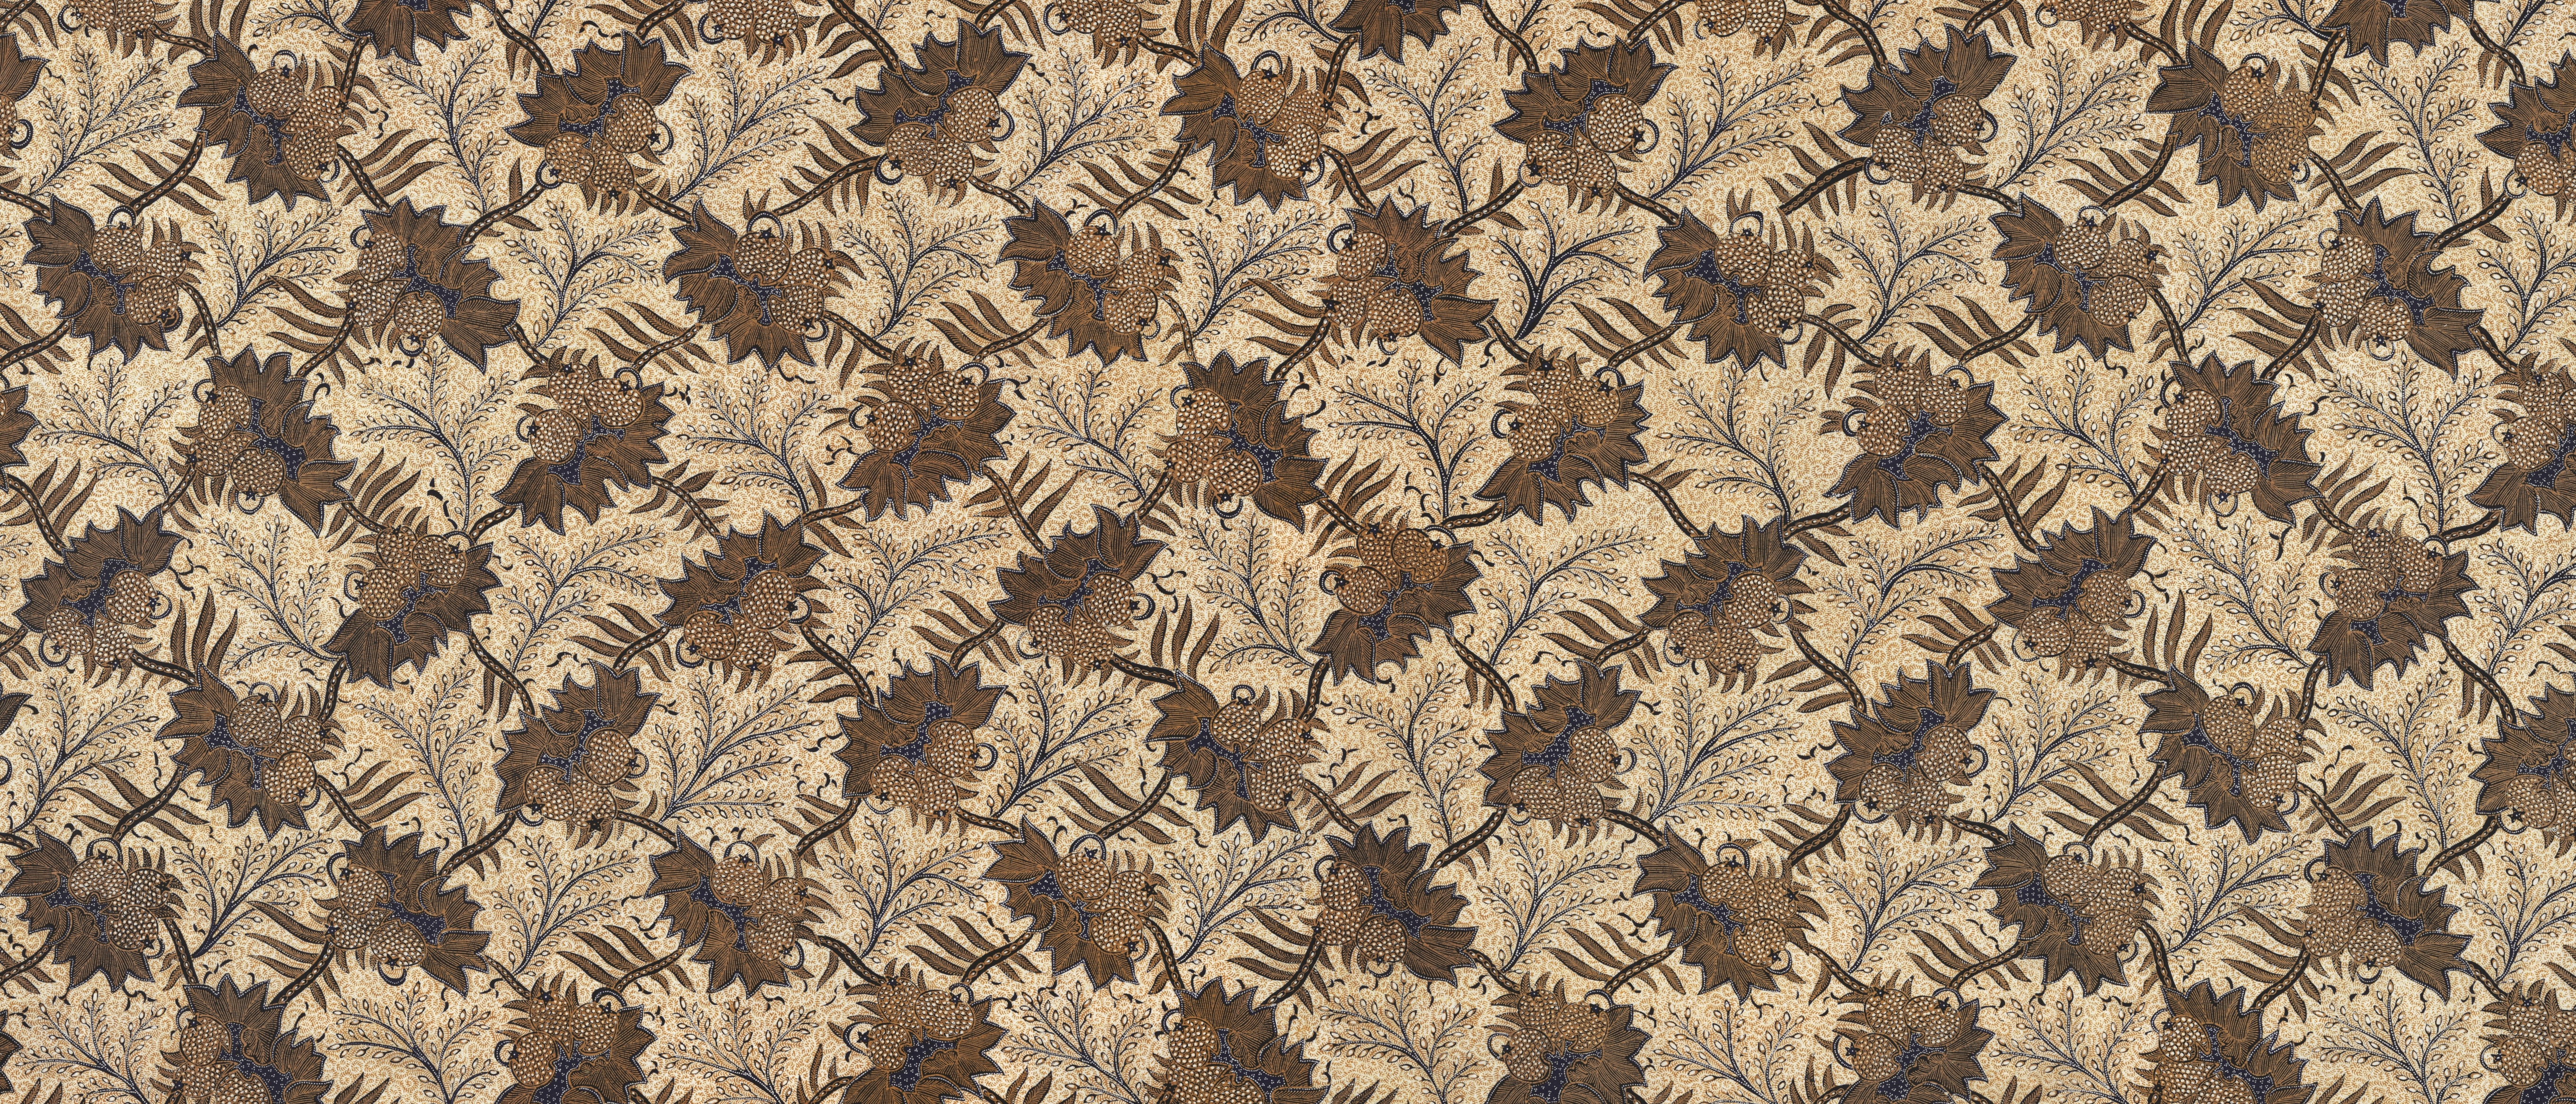 General 5445x2334 ultrawide fabric texture pattern symmetry